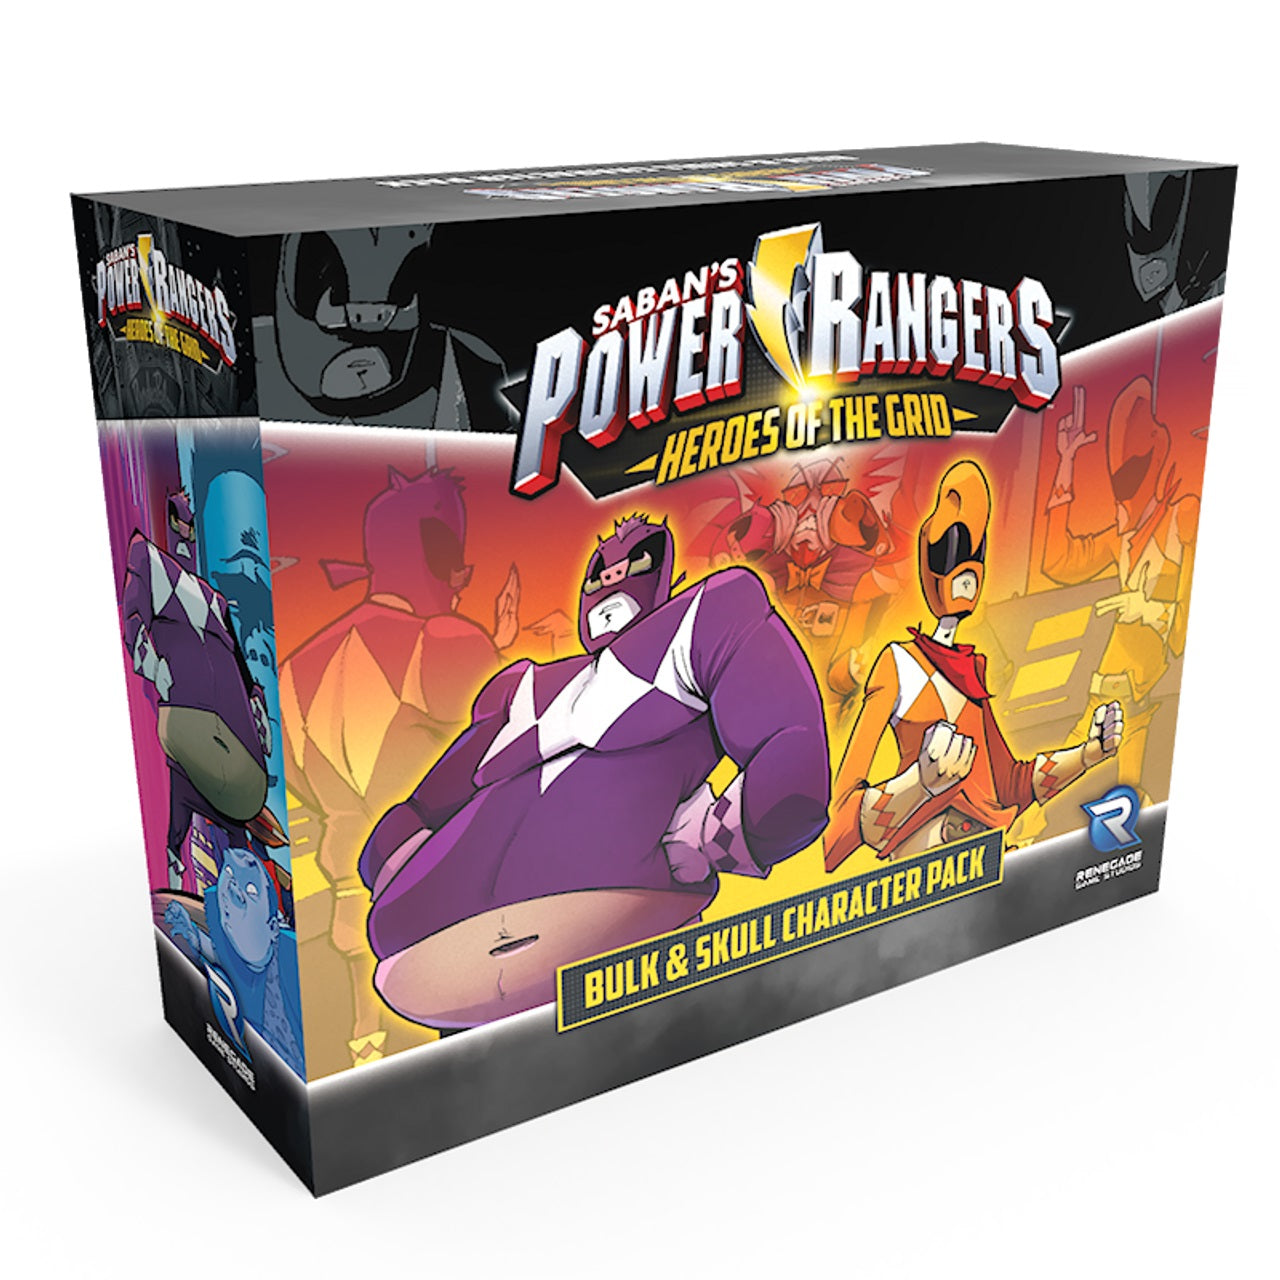 Power Rangers Heroes of the Grid - Bulk and Skull